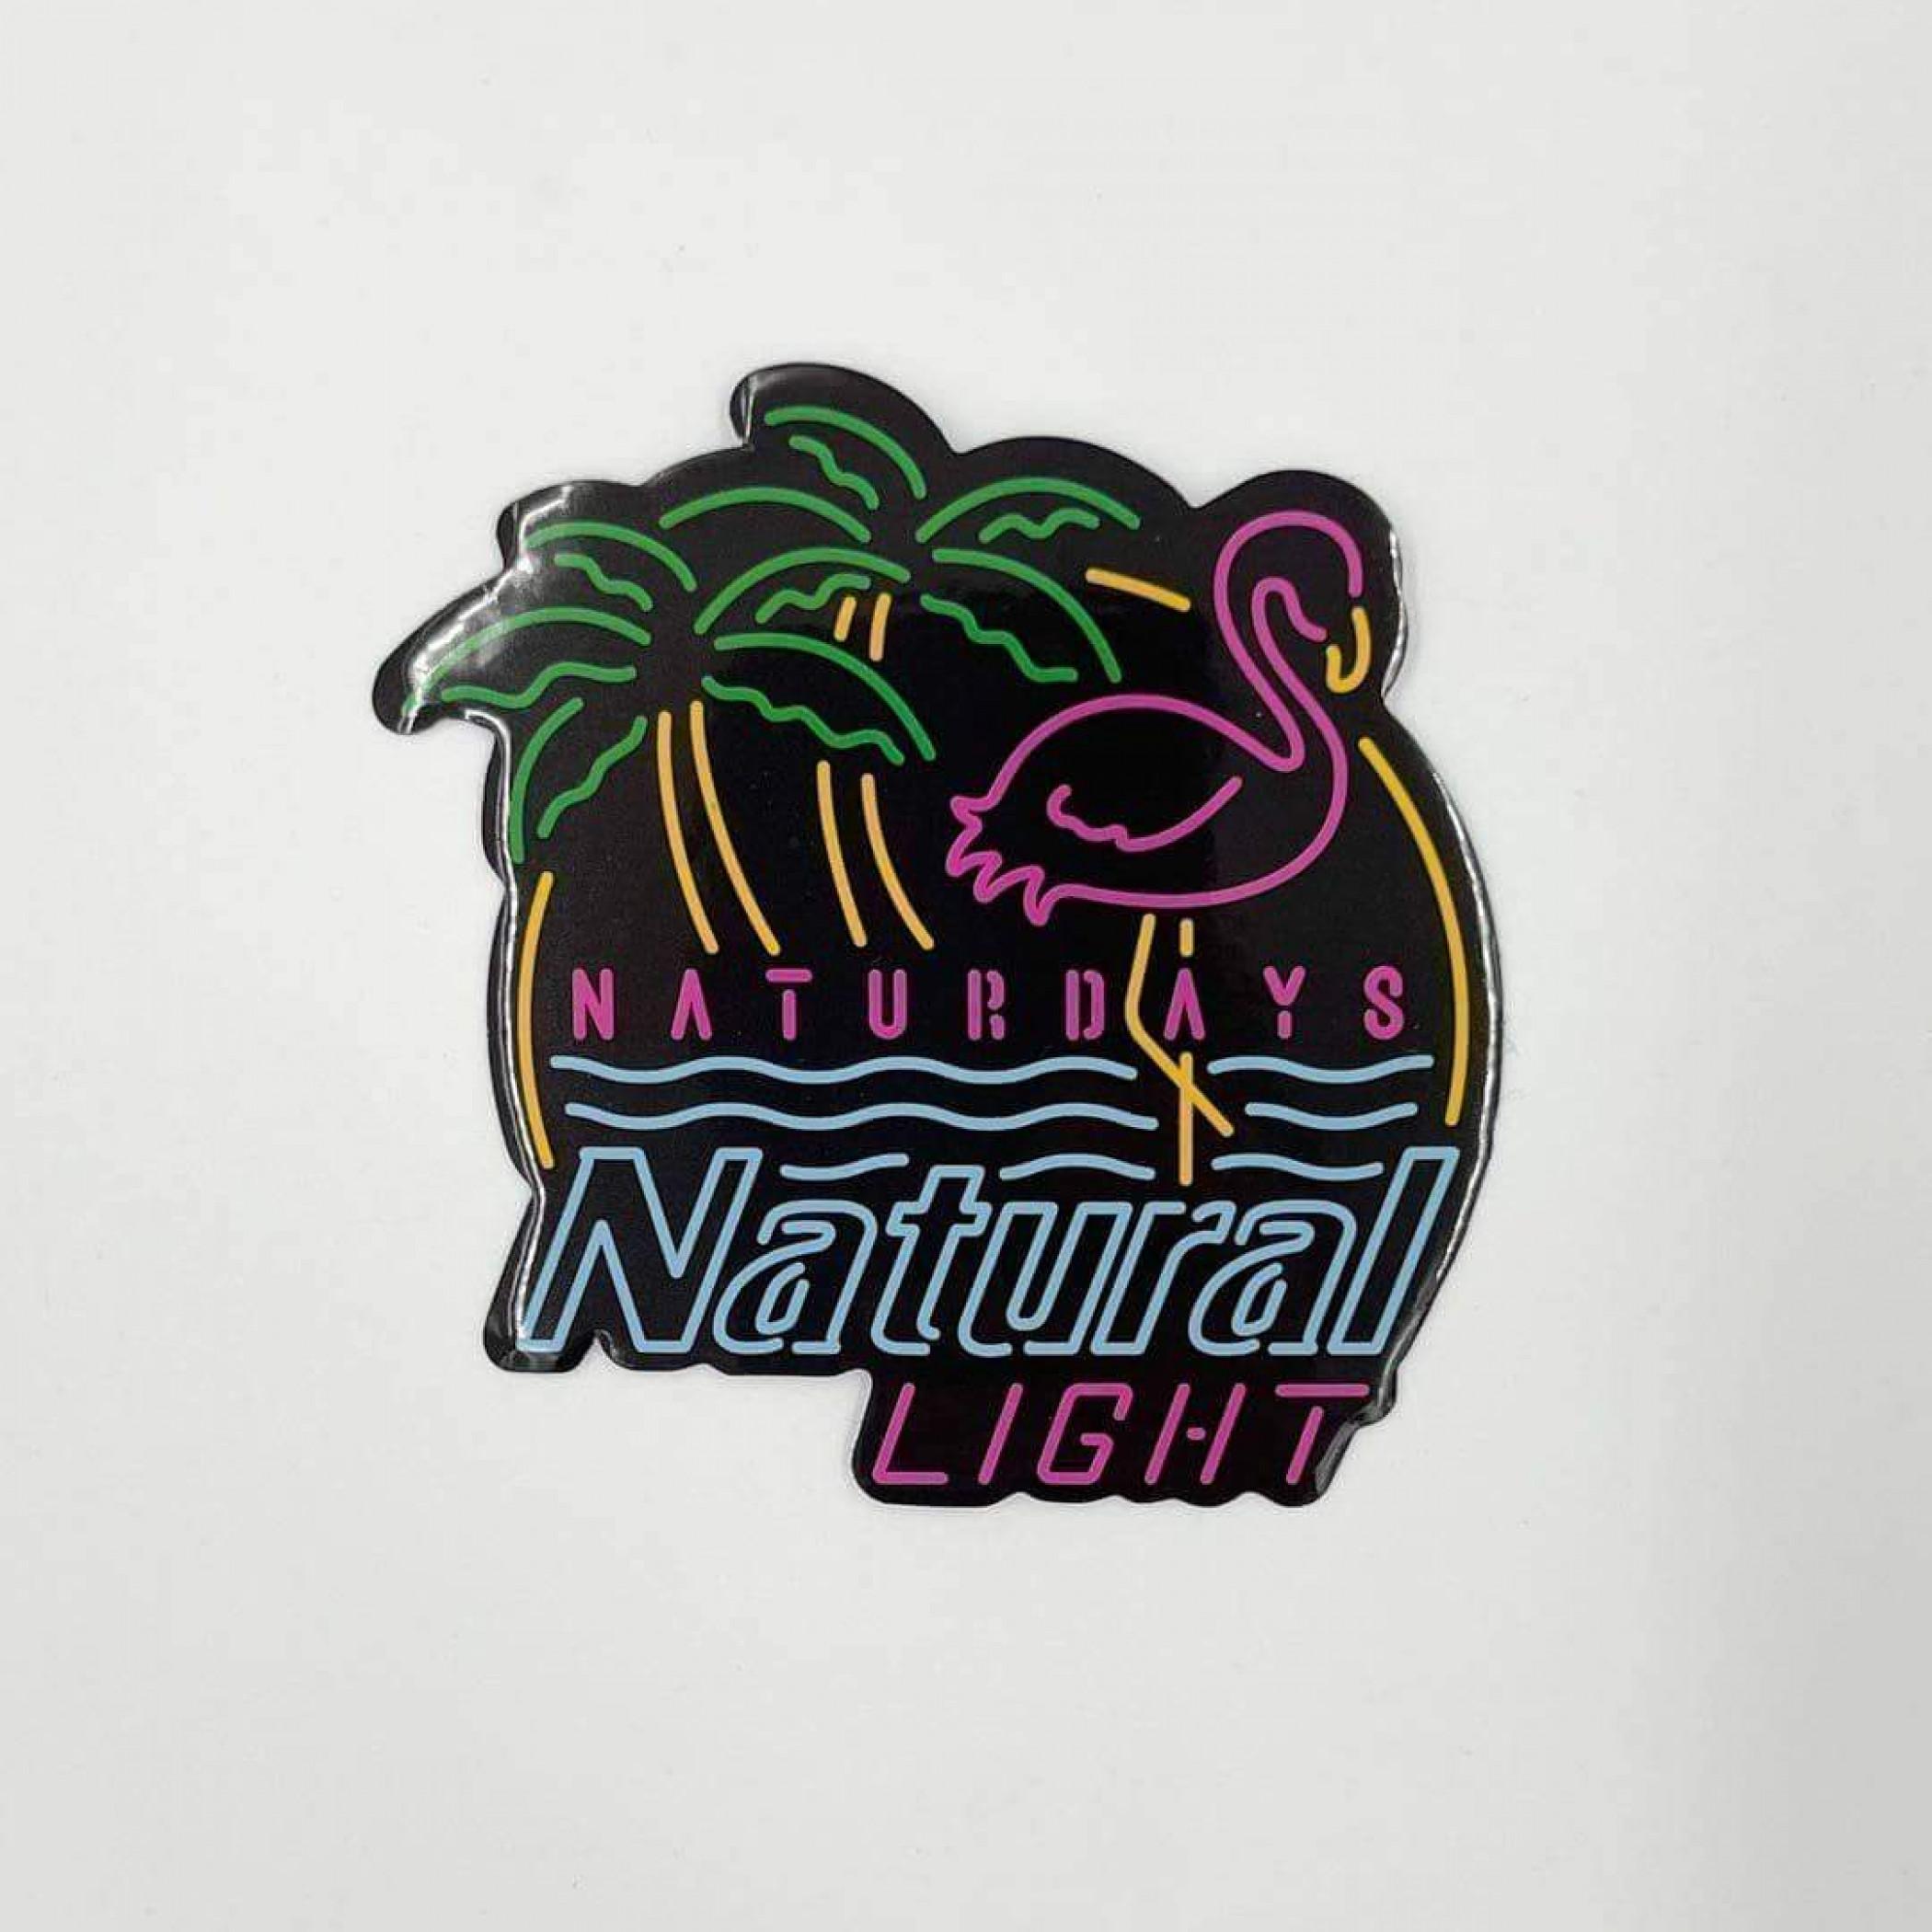 Naturdays Neon Sticker